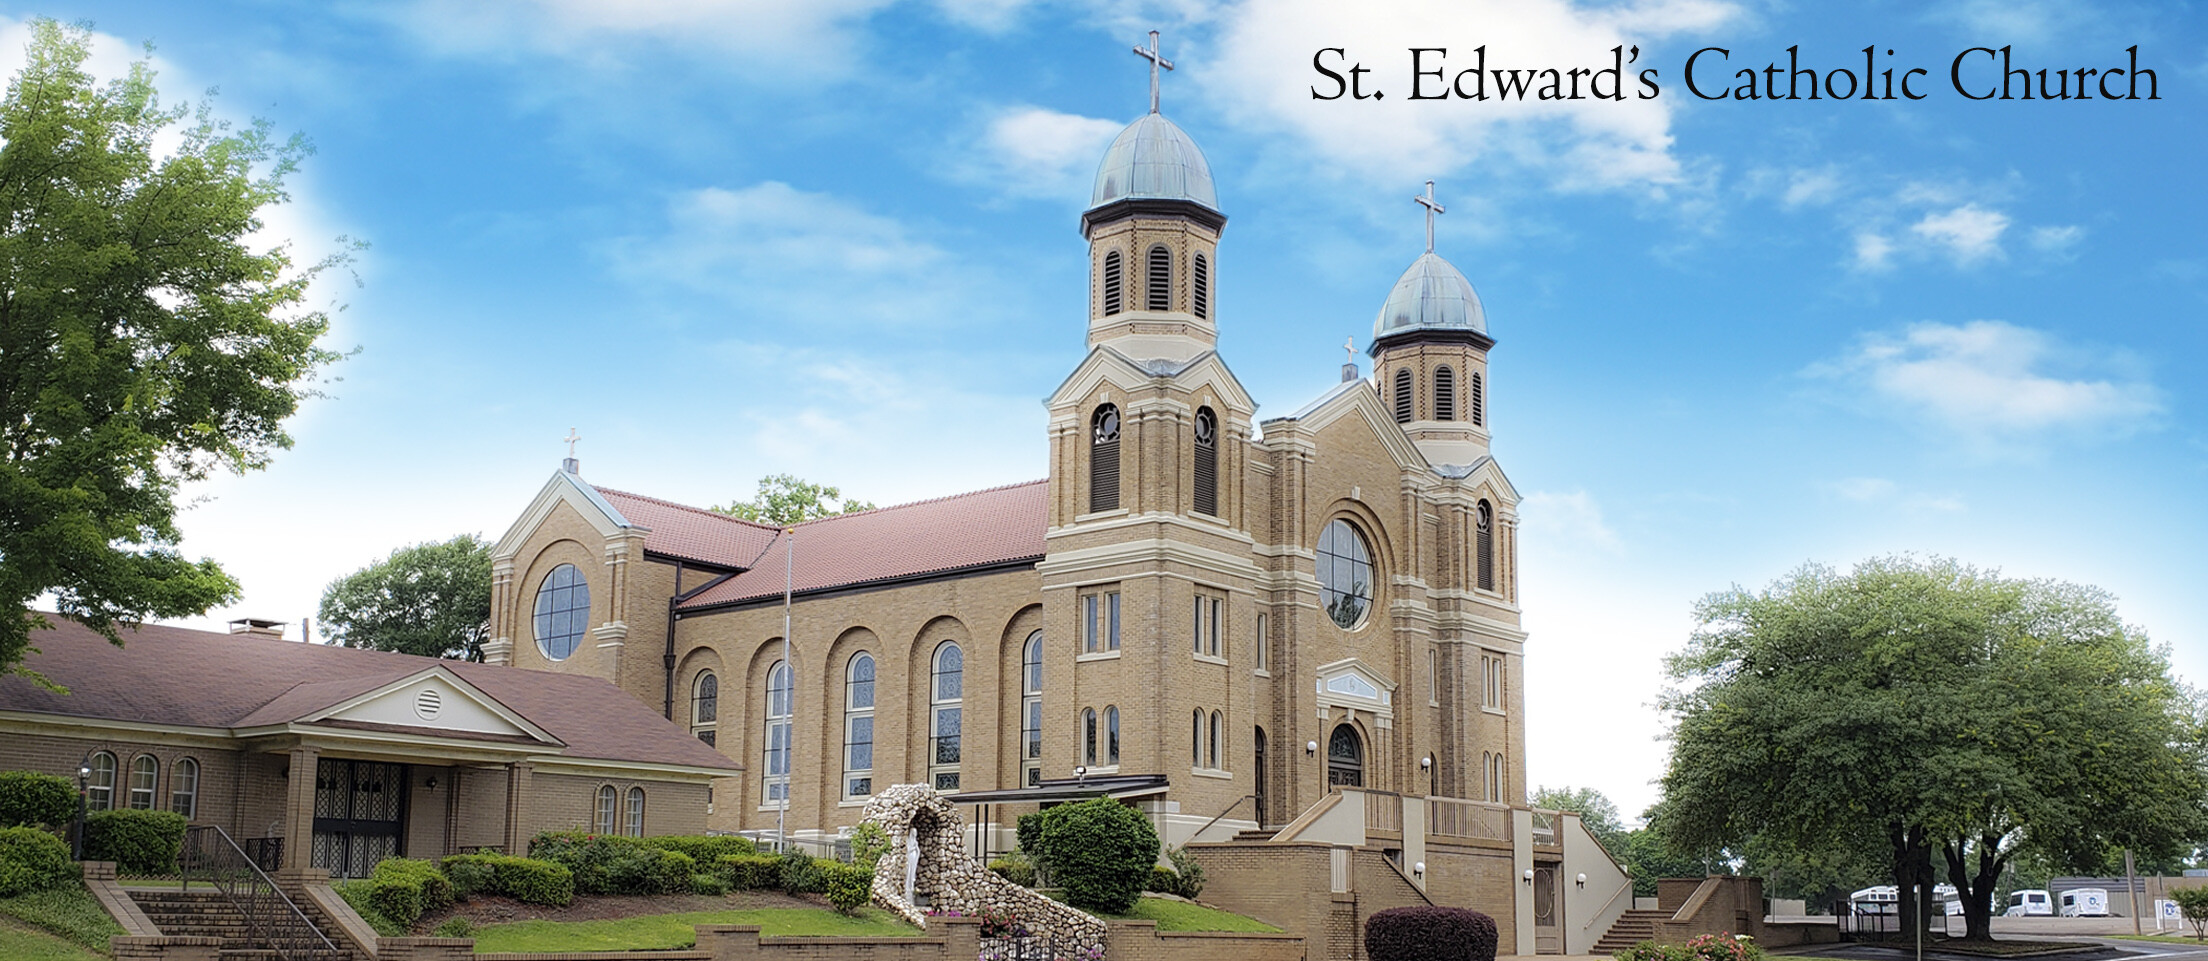 Welcome to St. Edward's Catholic Church